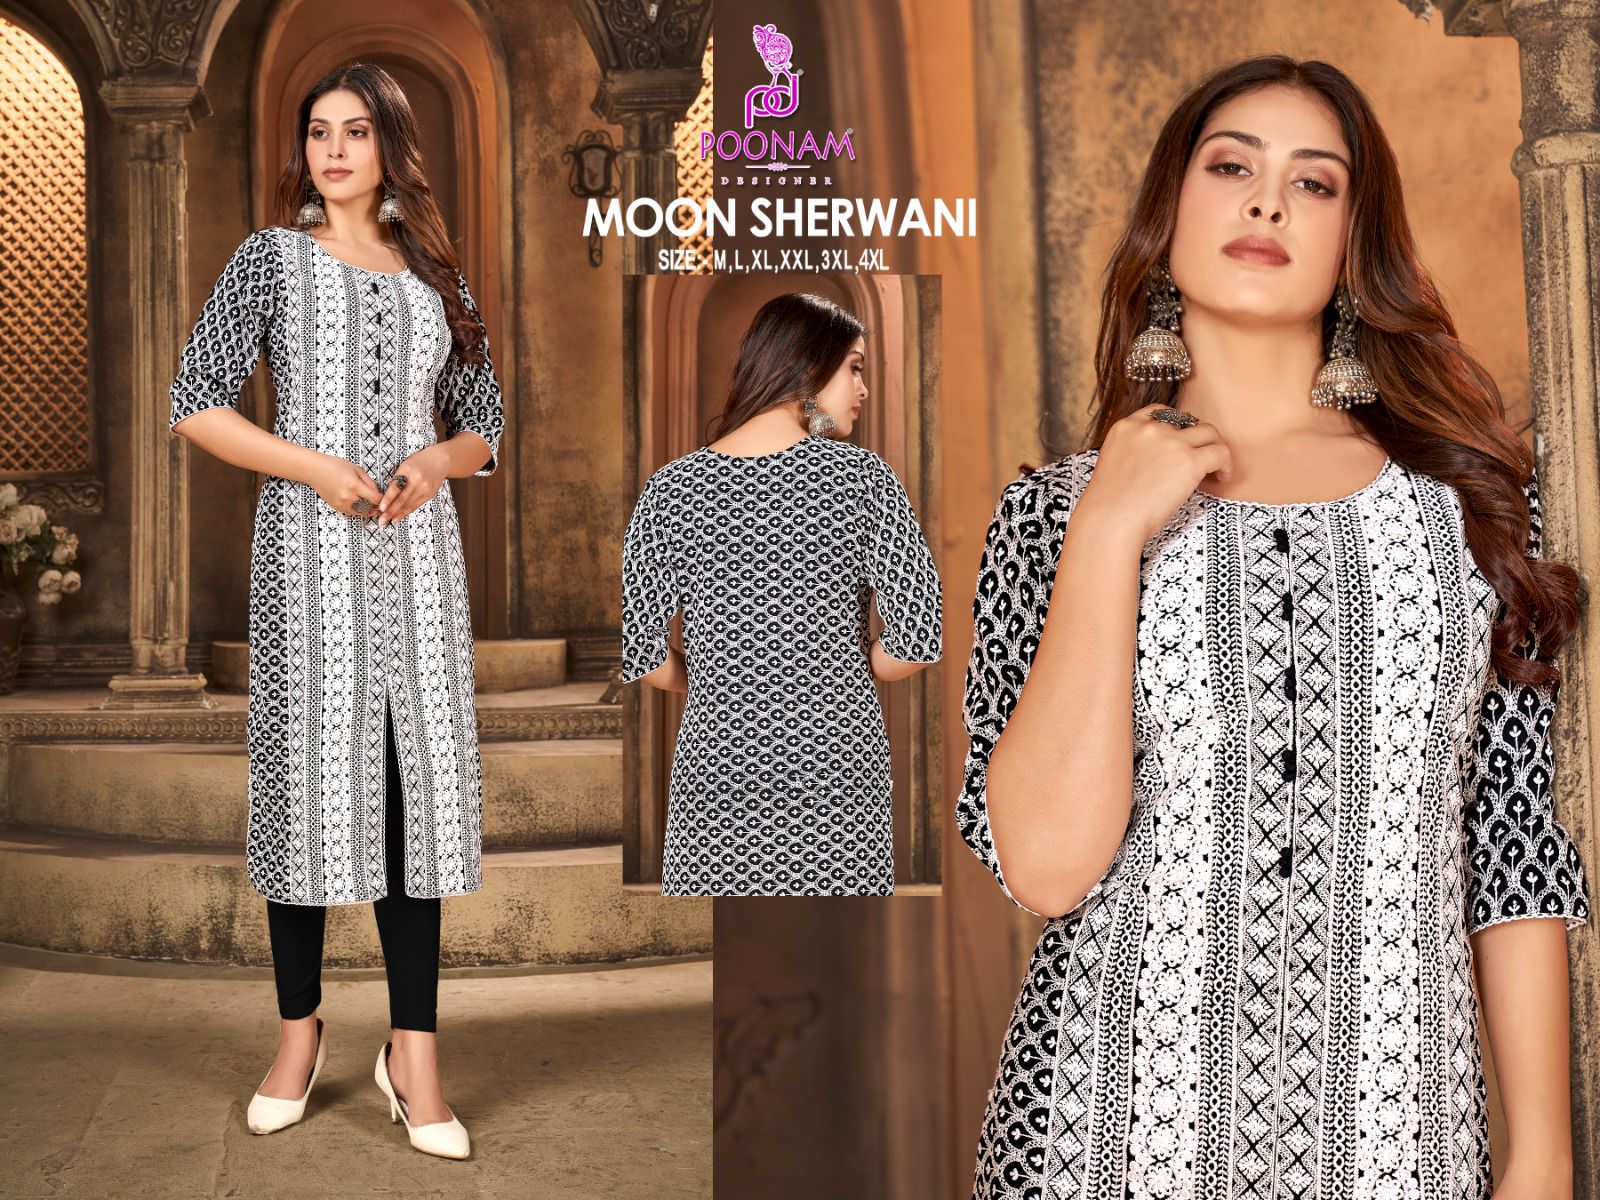 Poonam Moon Sherwani collection 2